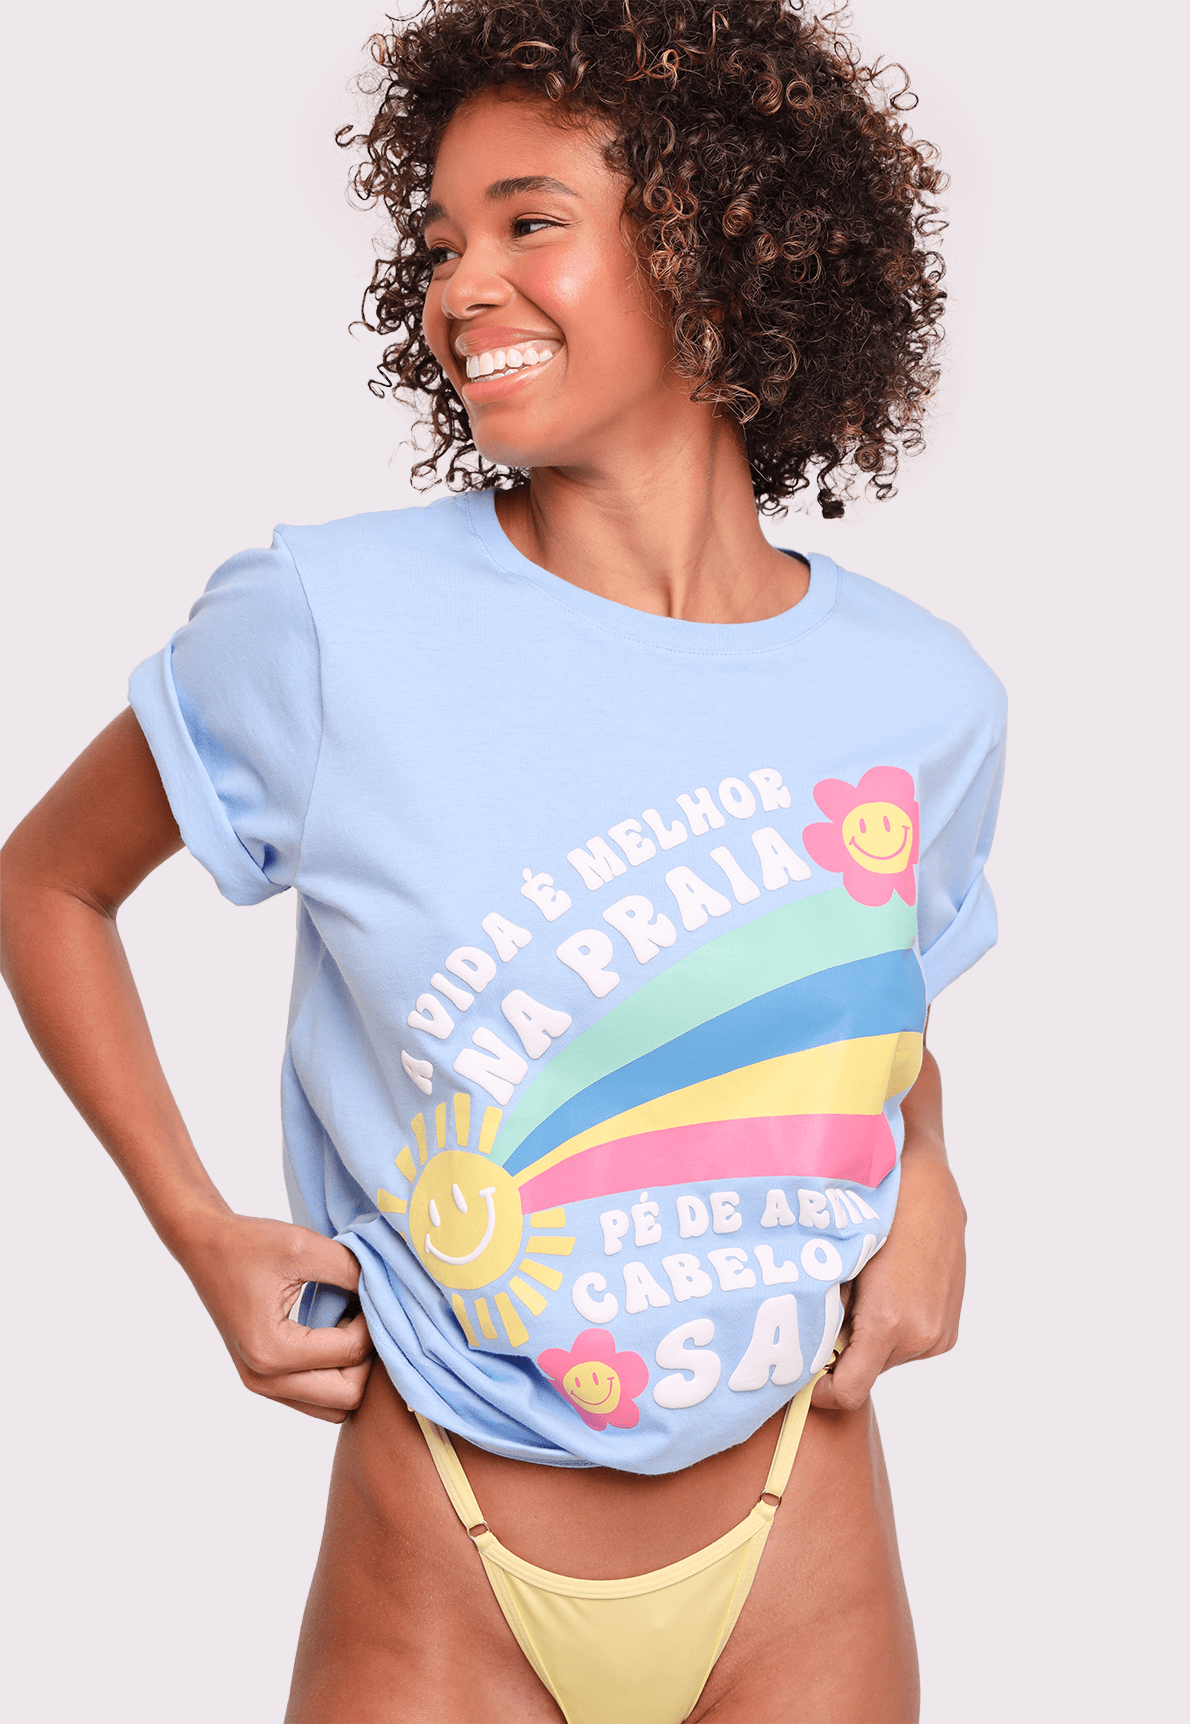 41692-t-shirt-deu-praia-mundo-lolita-1